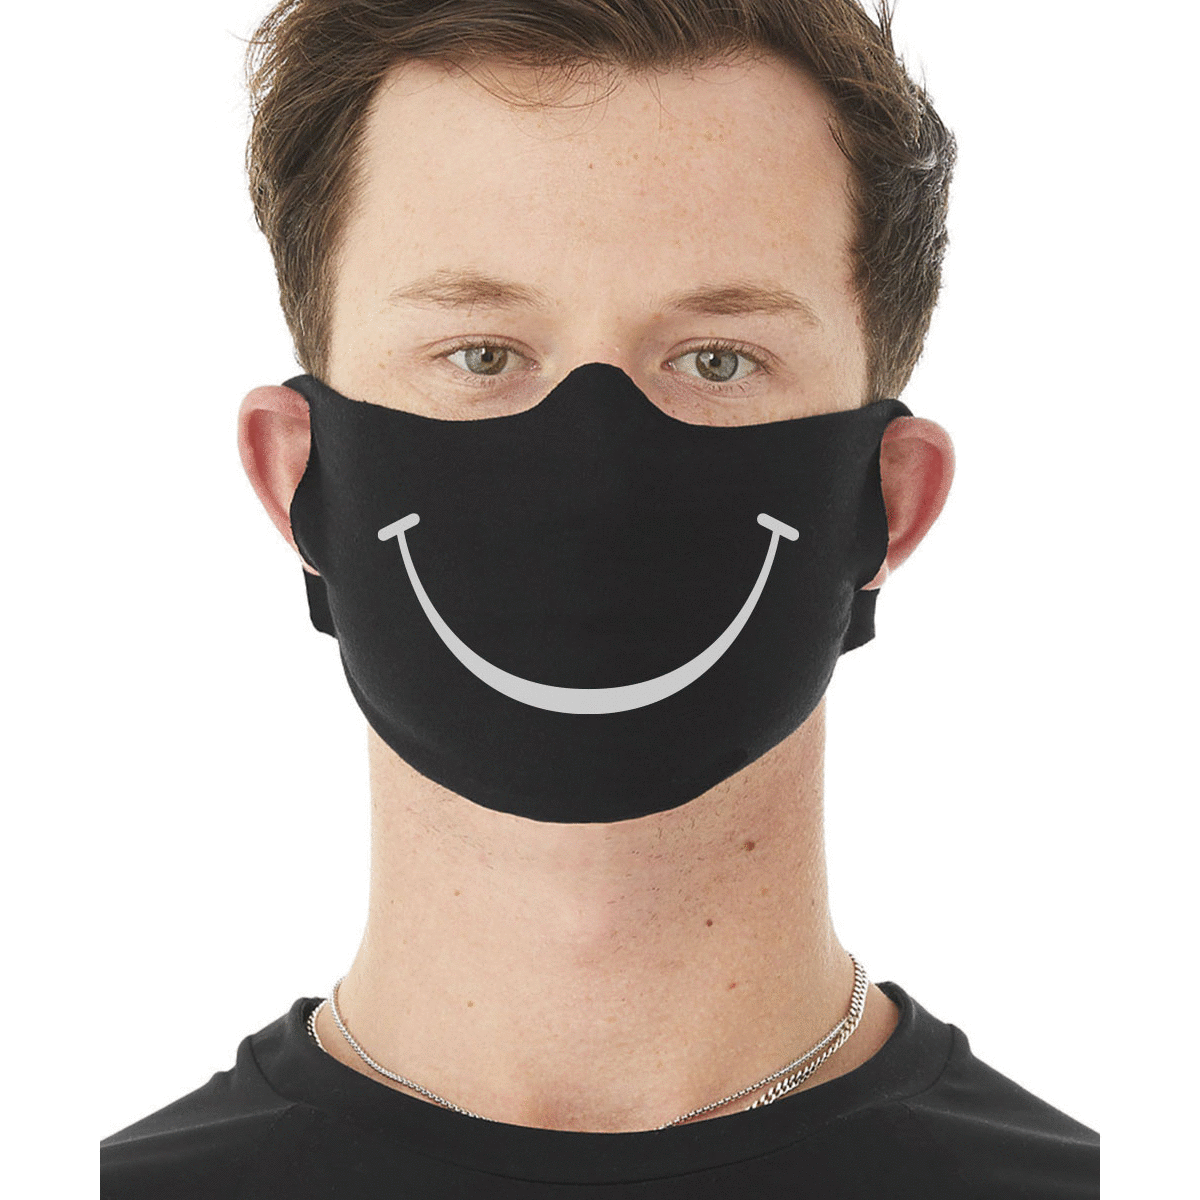 Press Press Merch - Virginia - Custom Face Mask - Example of a 1-color print